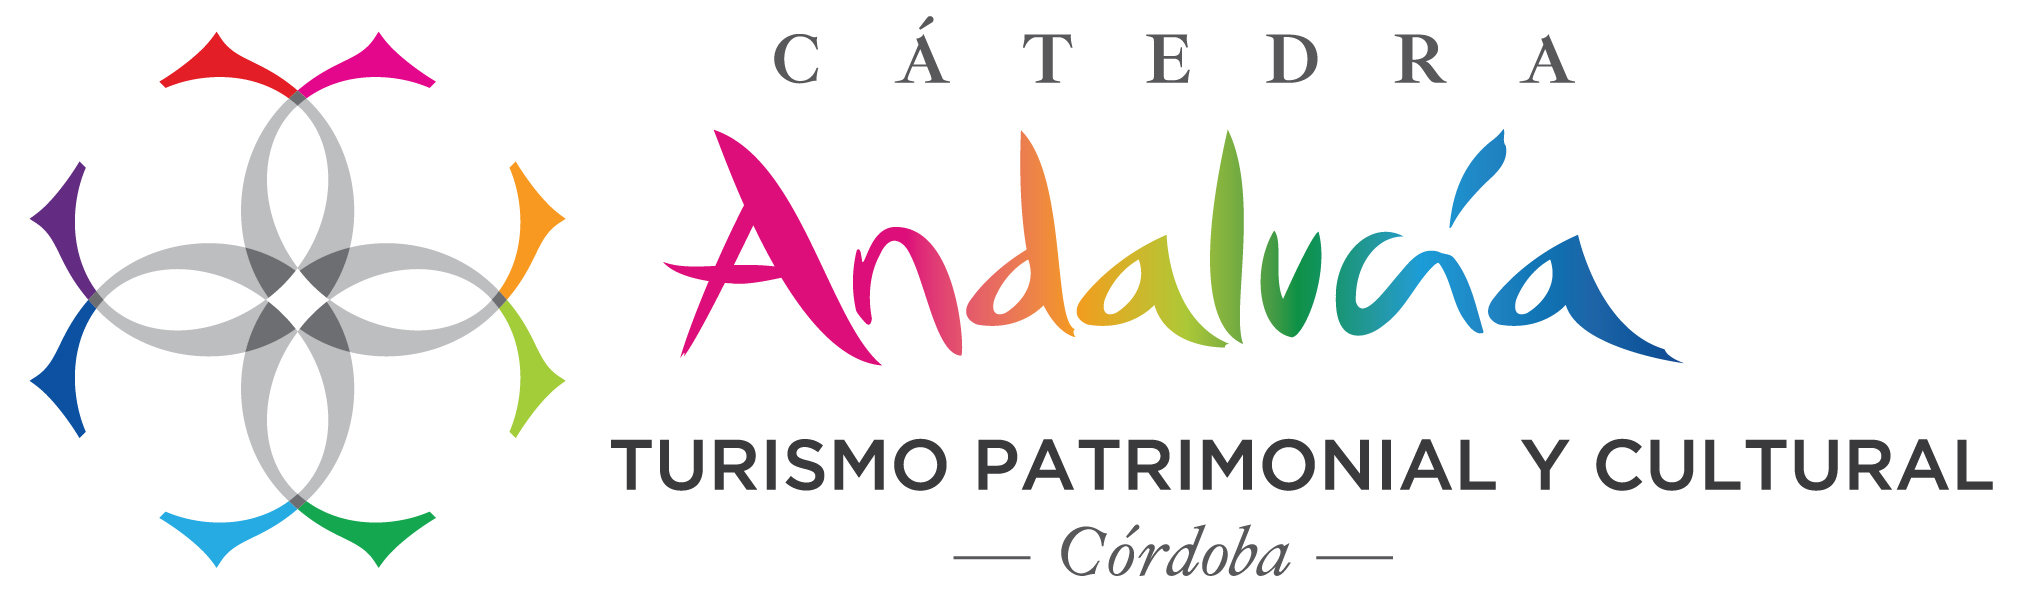 CÁTEDRA ANDALUCÍA TURISMO PATRIMONIAL Y CULTURAL Córdoba horizontal color